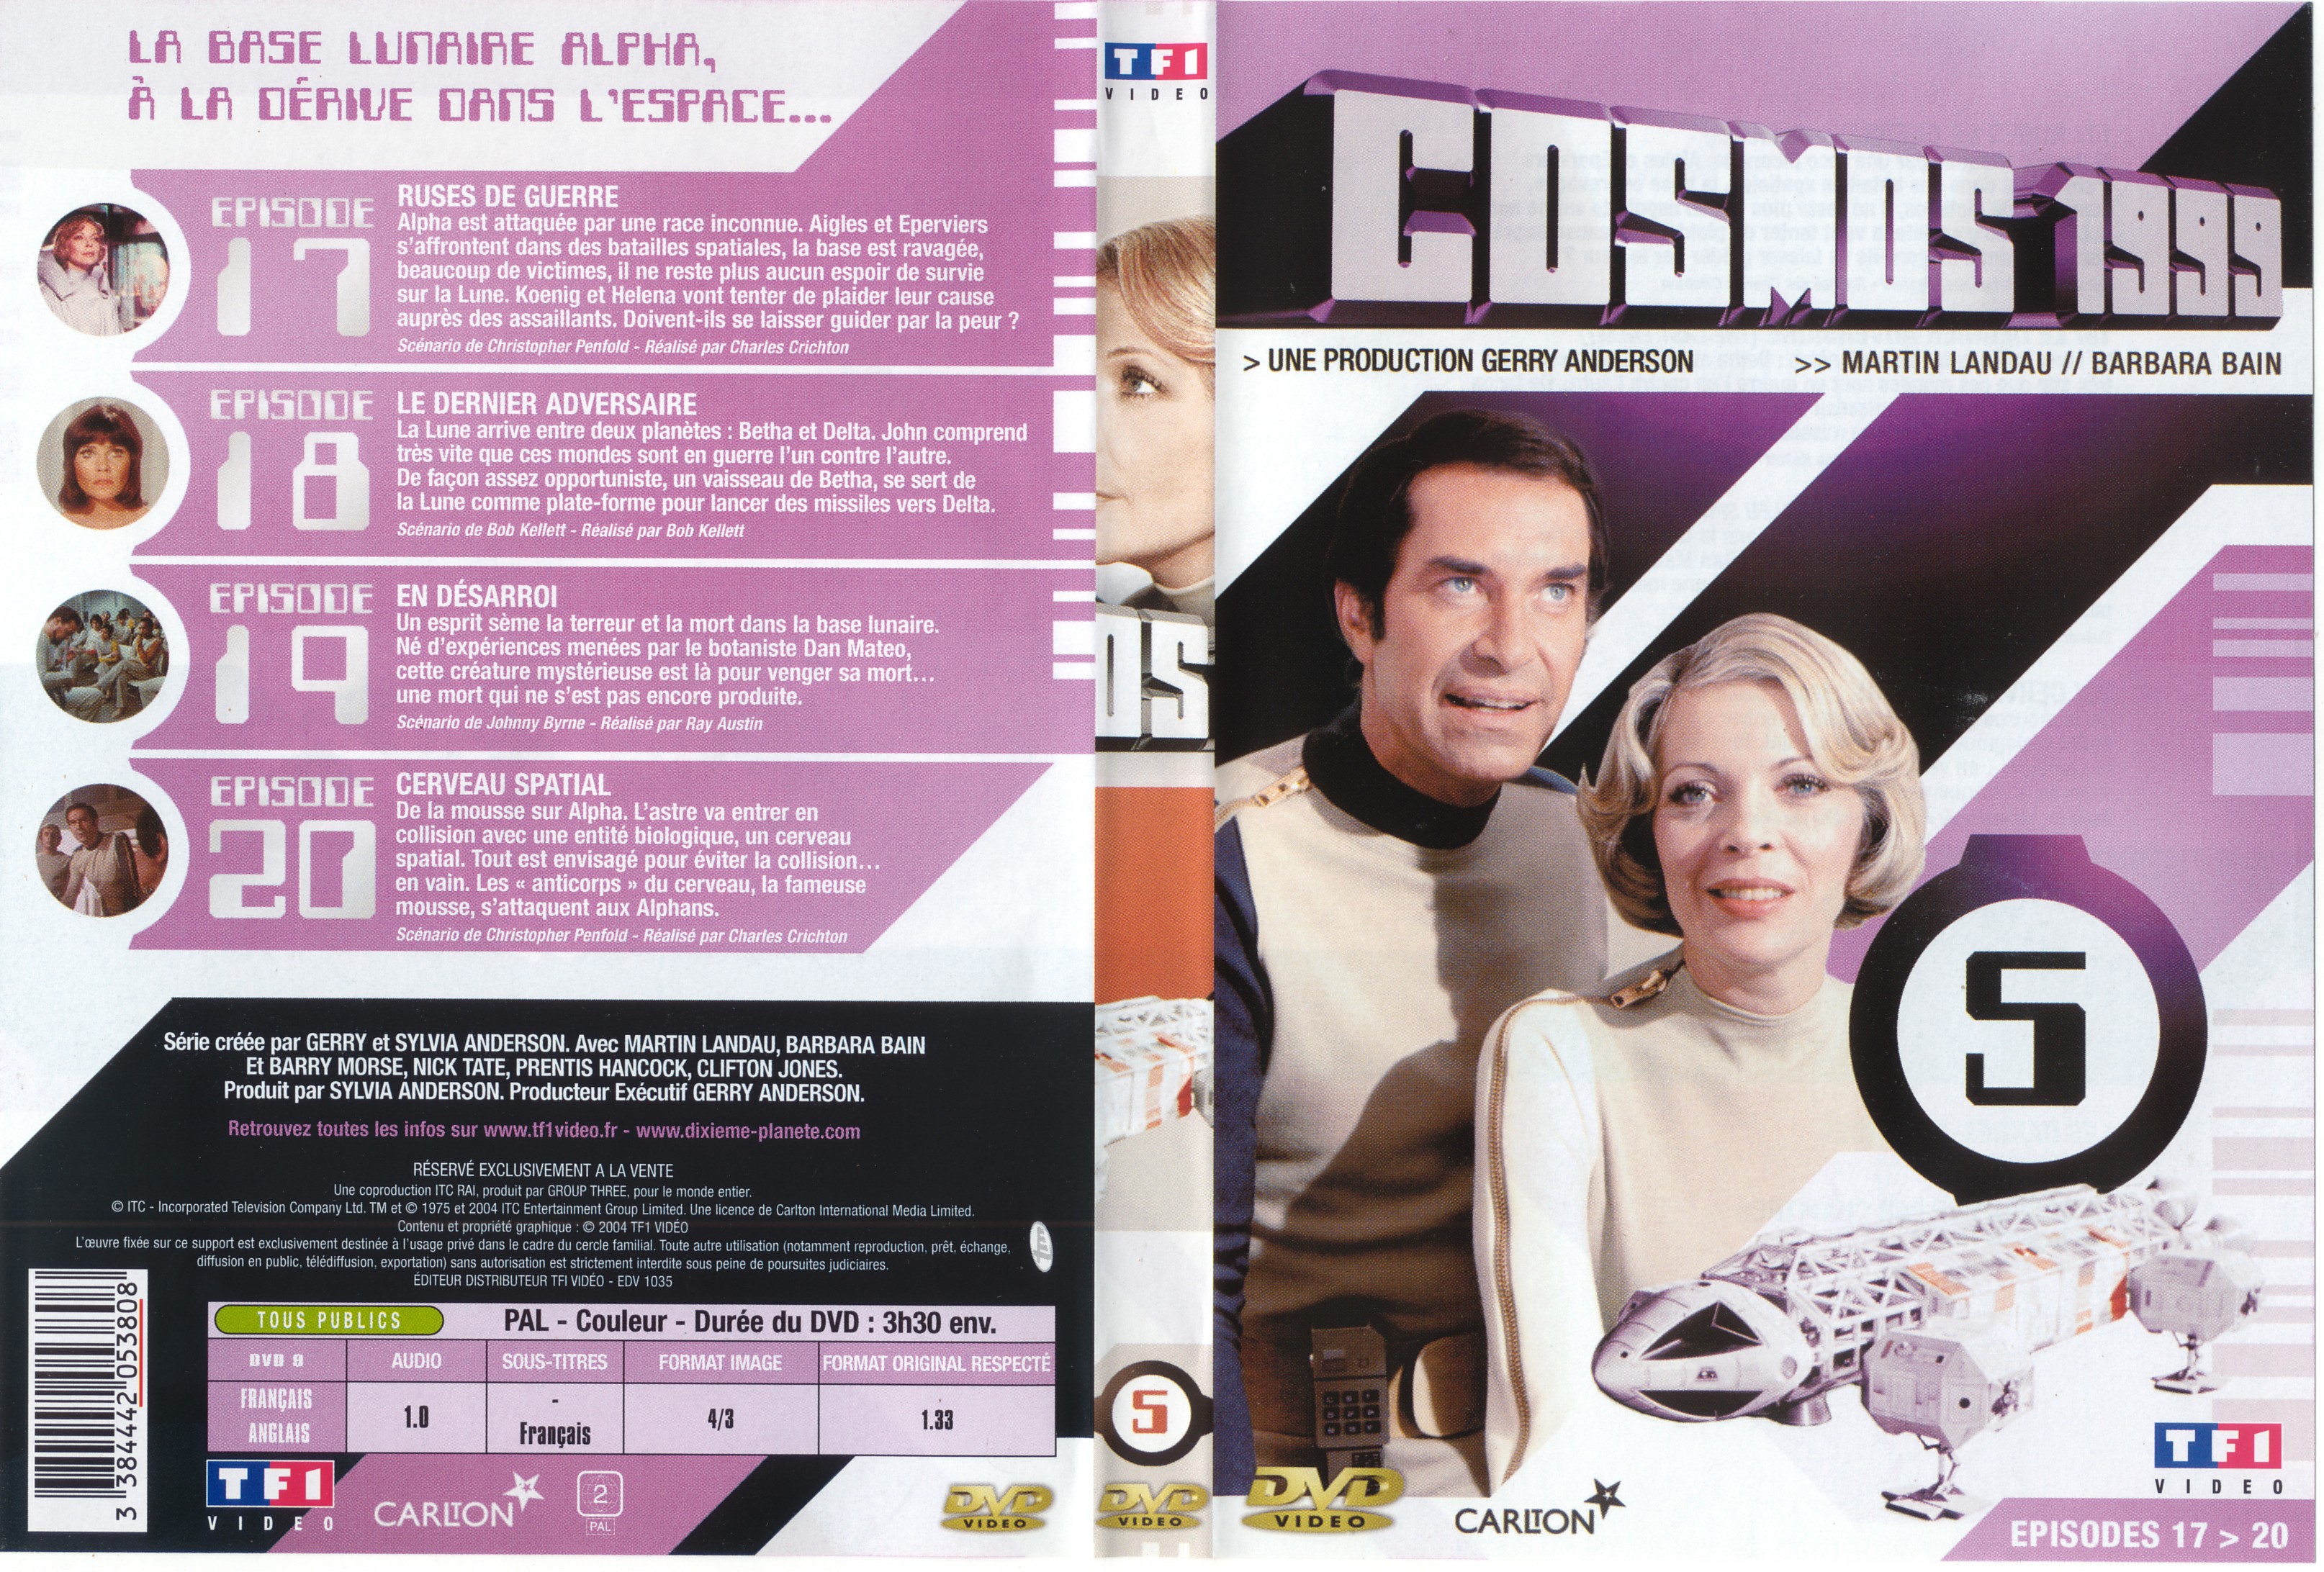 Jaquette DVD Cosmos 1999 saison 1 dvd 5